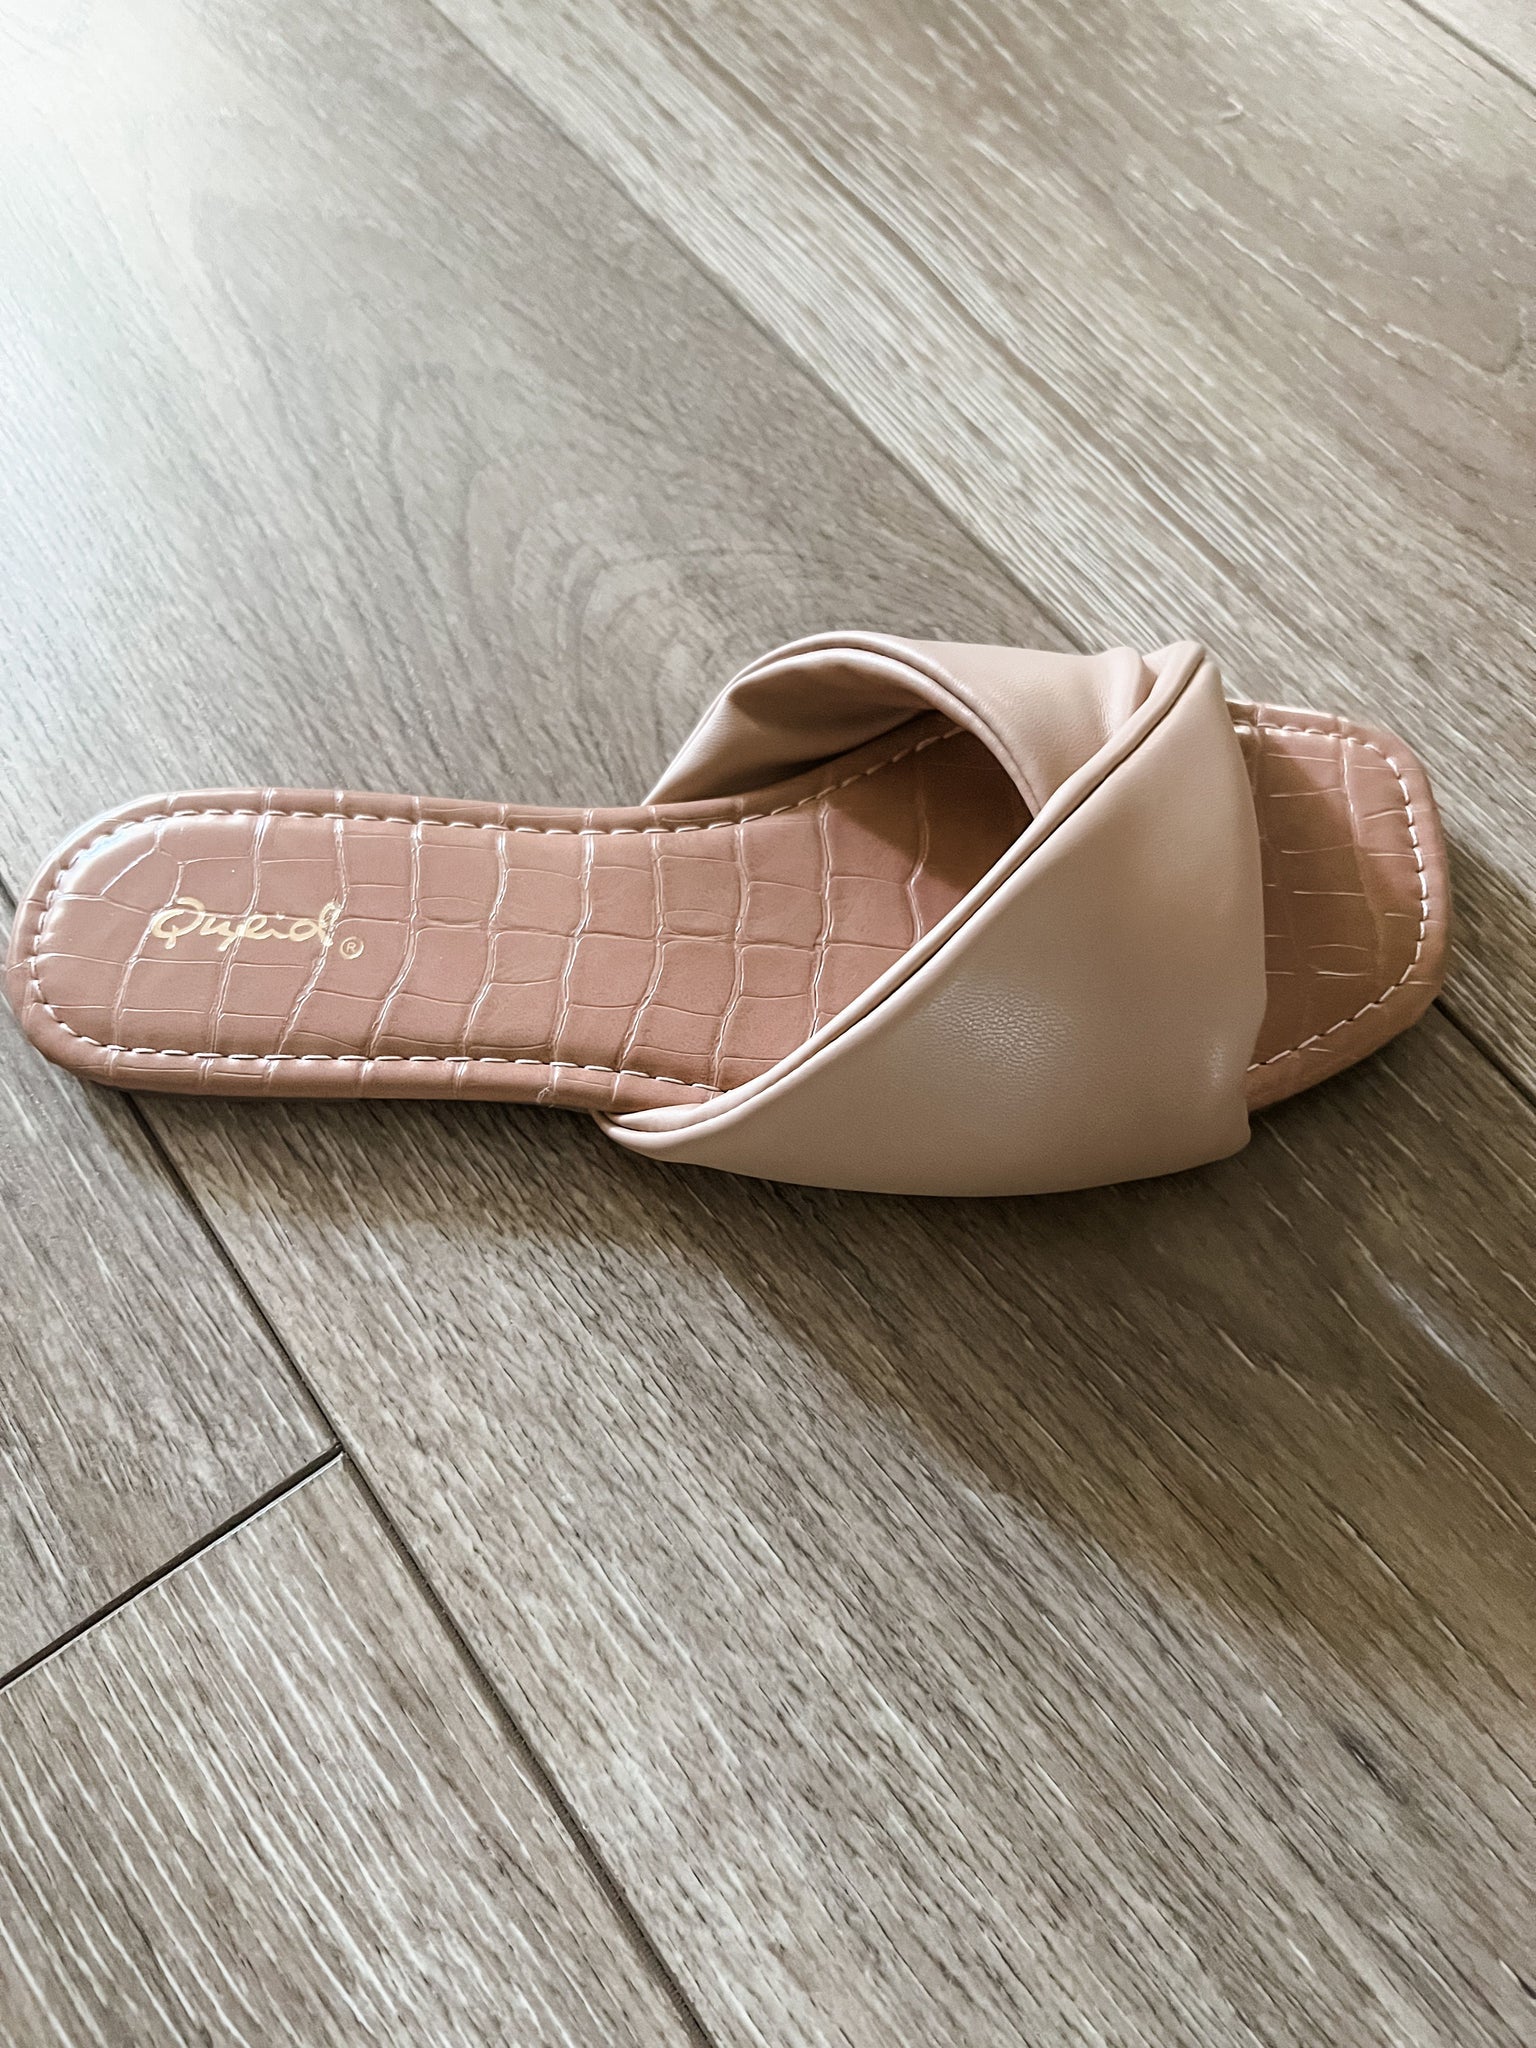 The Blush Flat Sandals